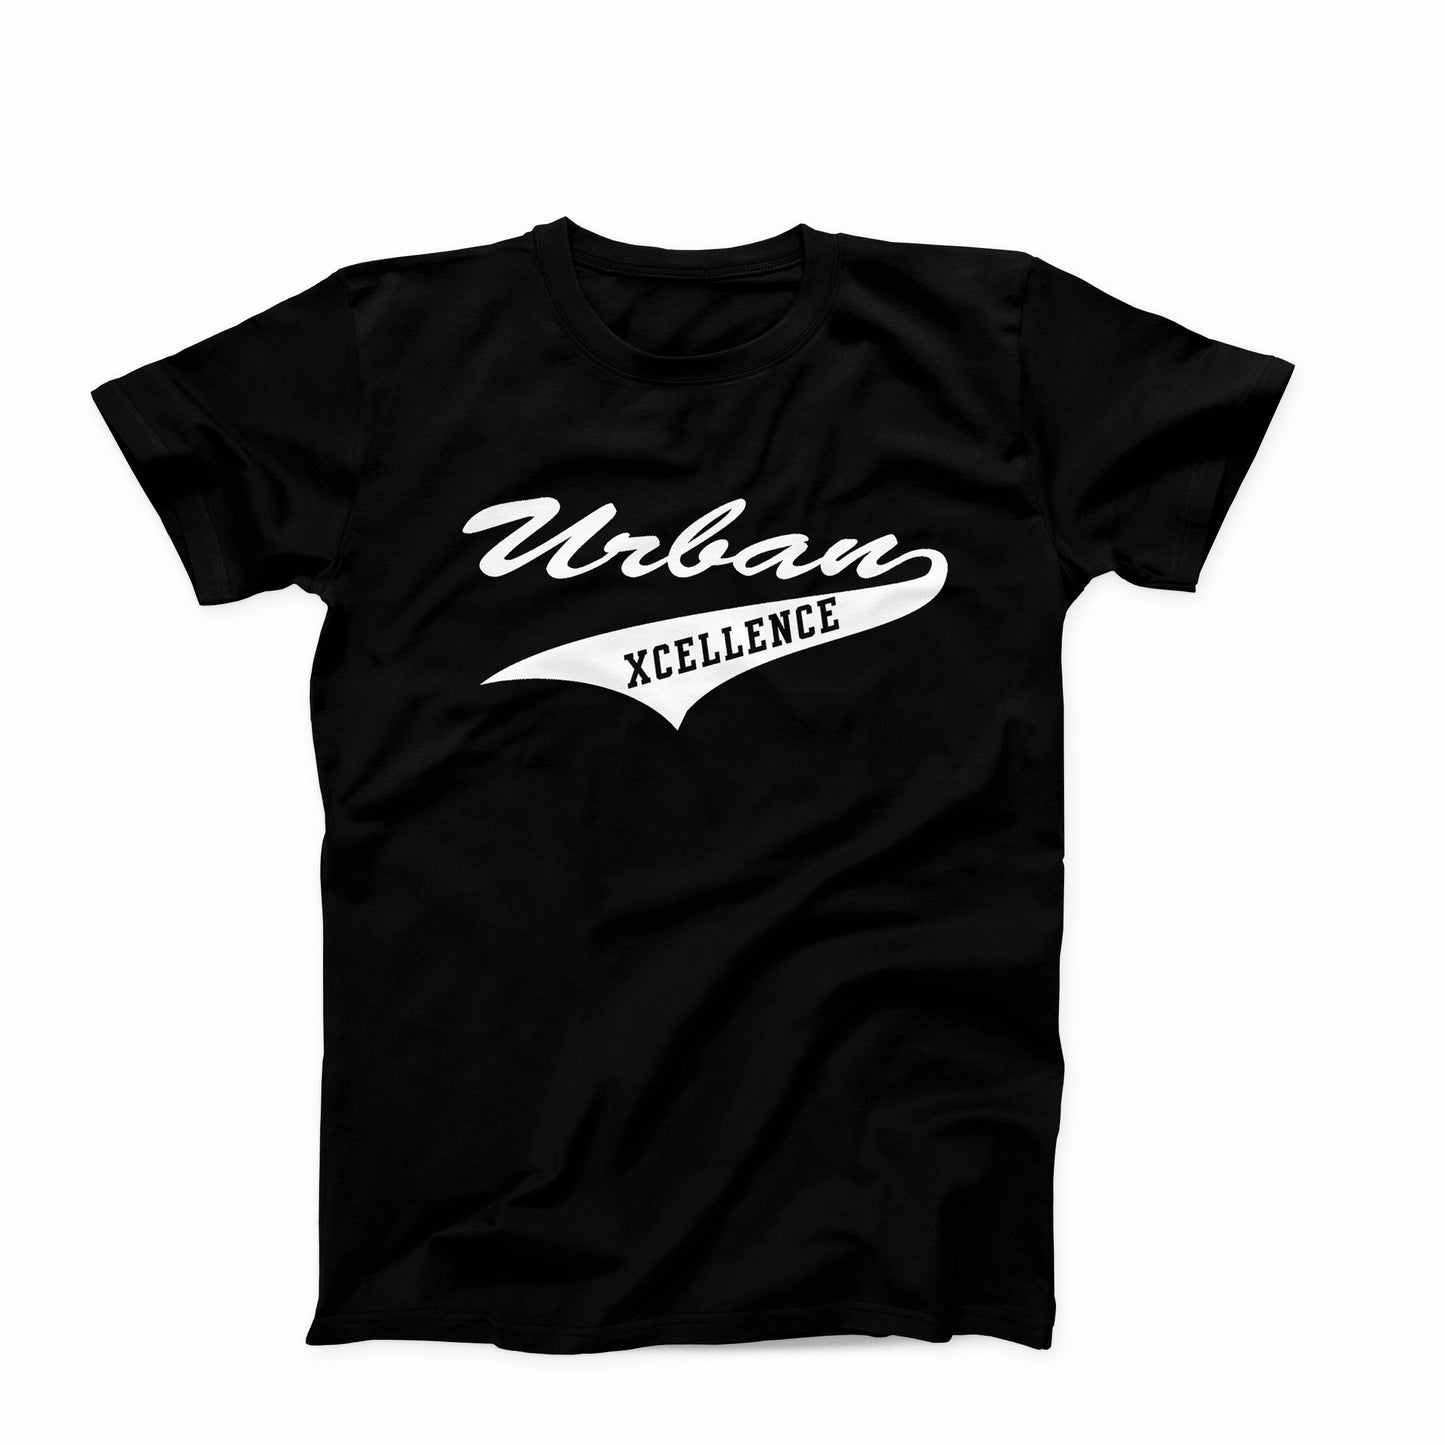 T-shirt:  Urban X Tail